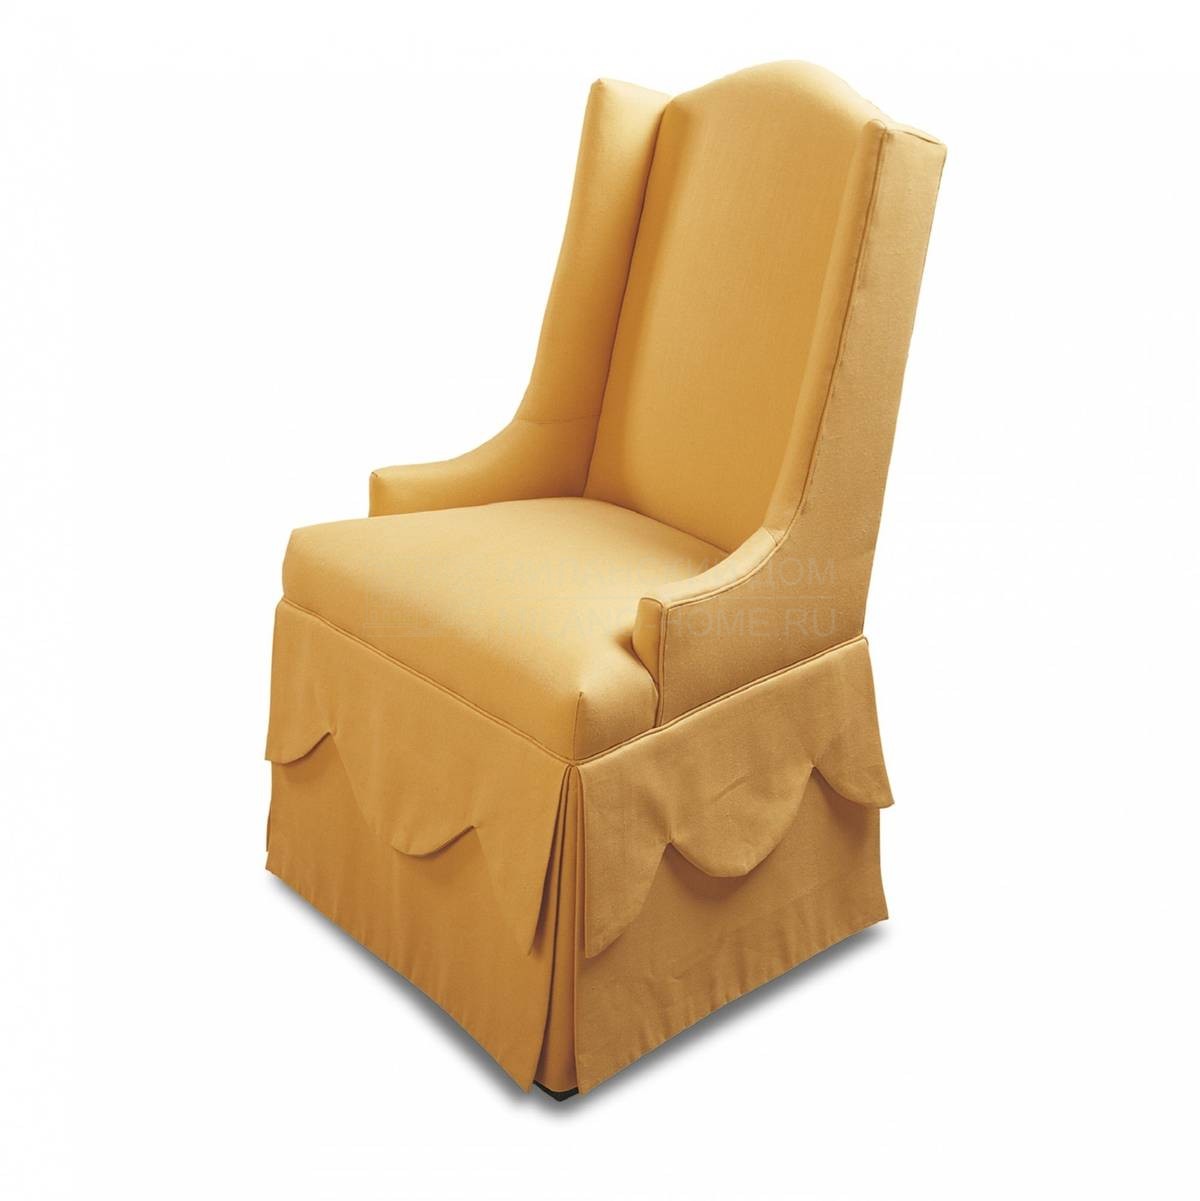 Кресло The Upholstery/P390 из Италии фабрики FRANCESCO MOLON